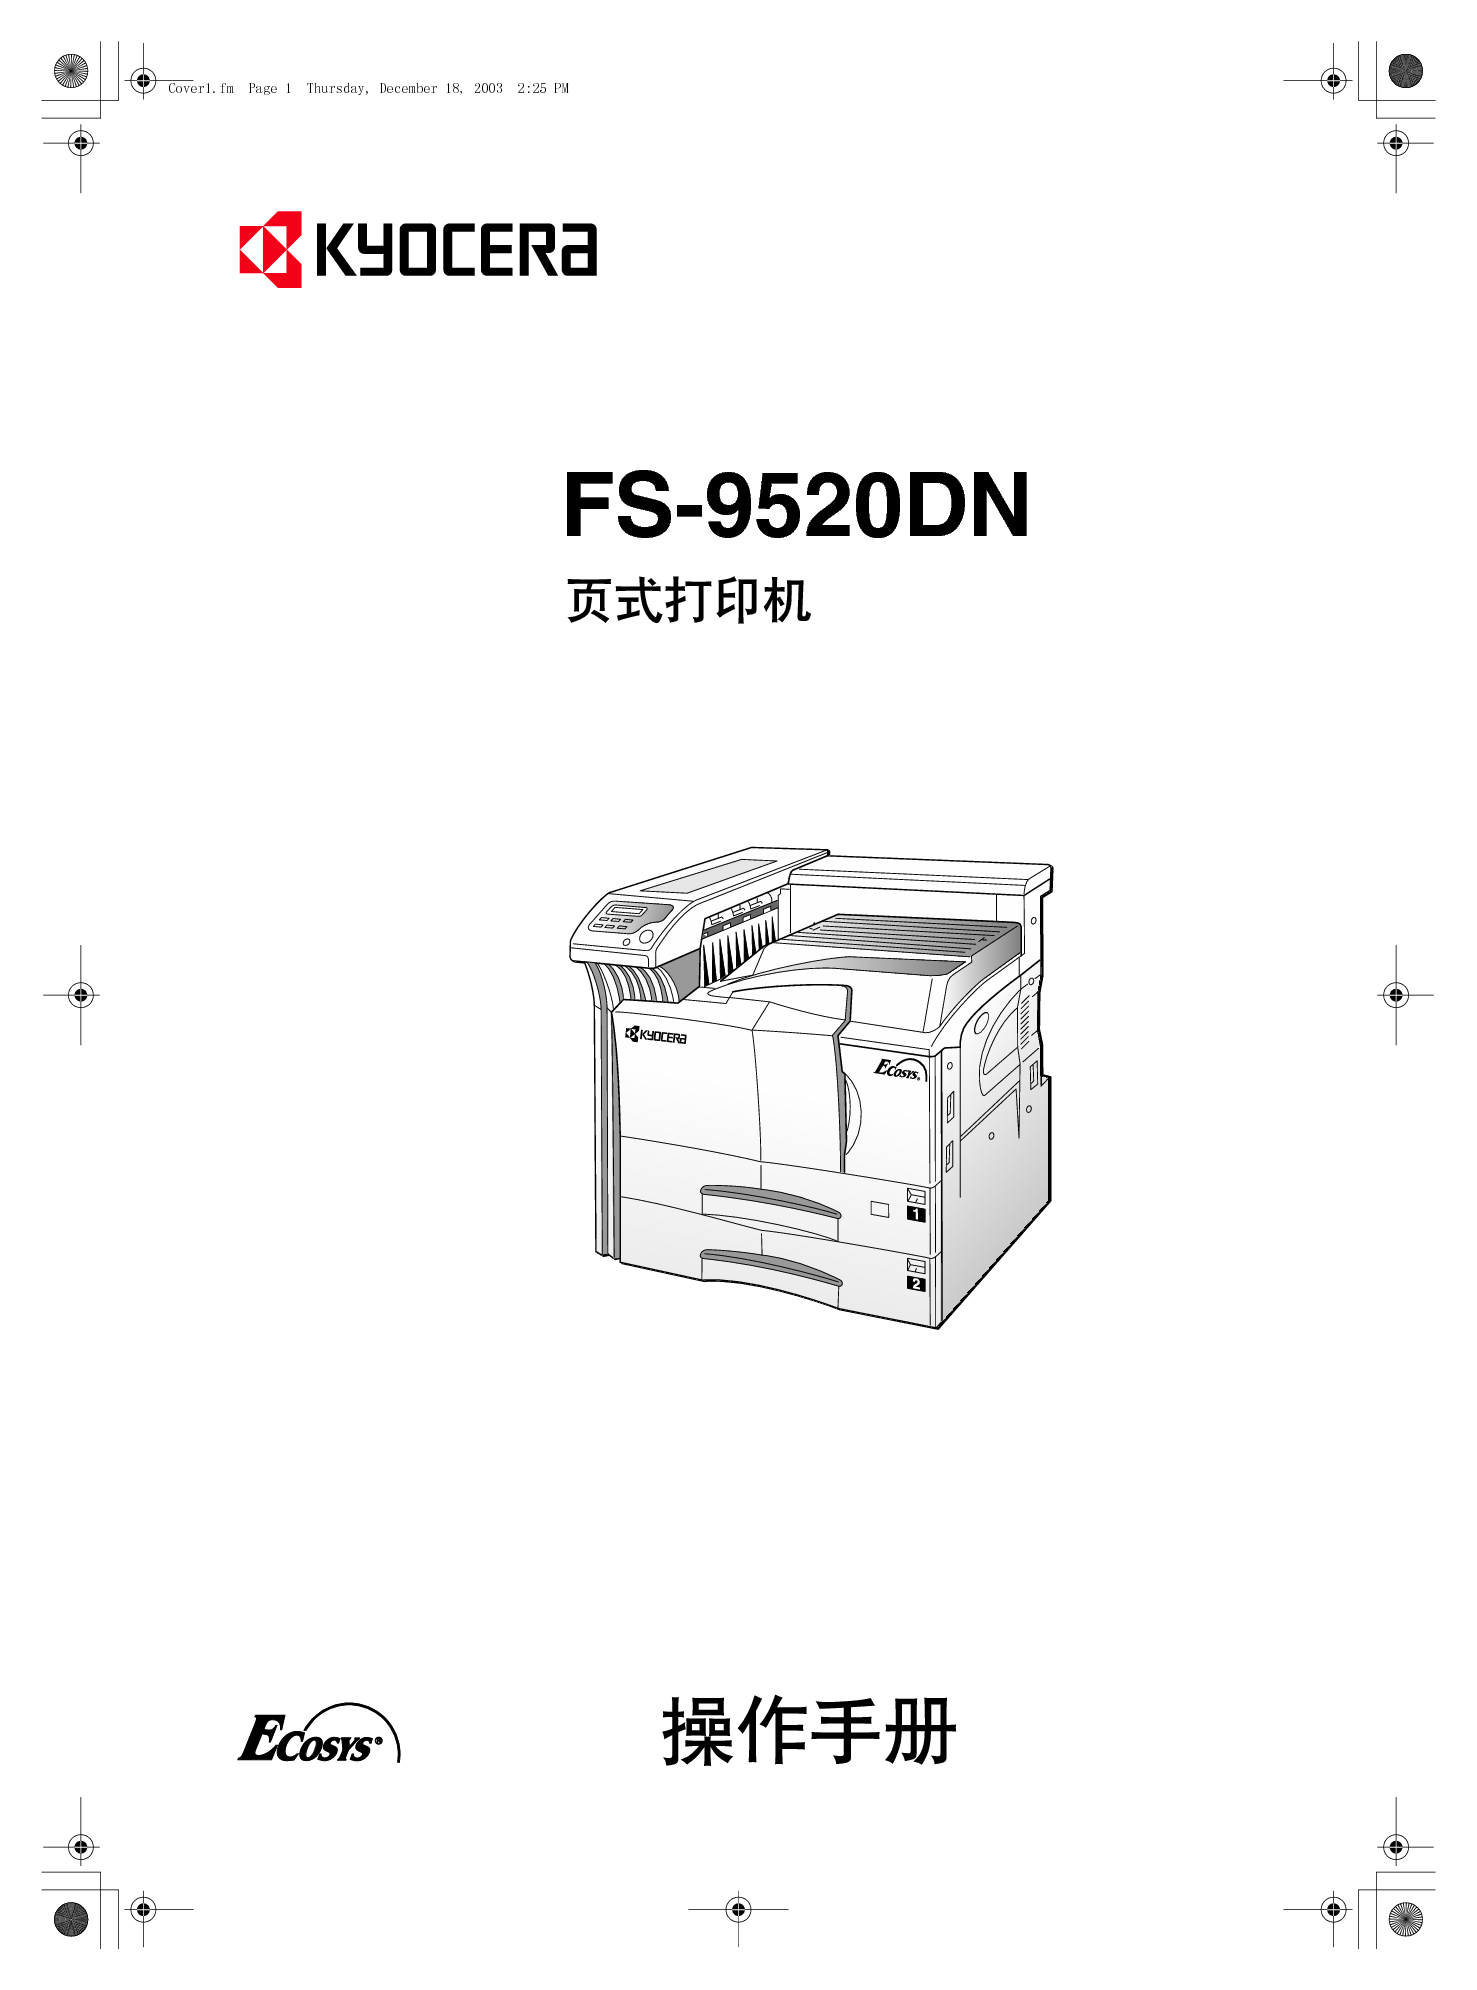 京瓷 Kyocera FS-9520DN 操作手册 封面